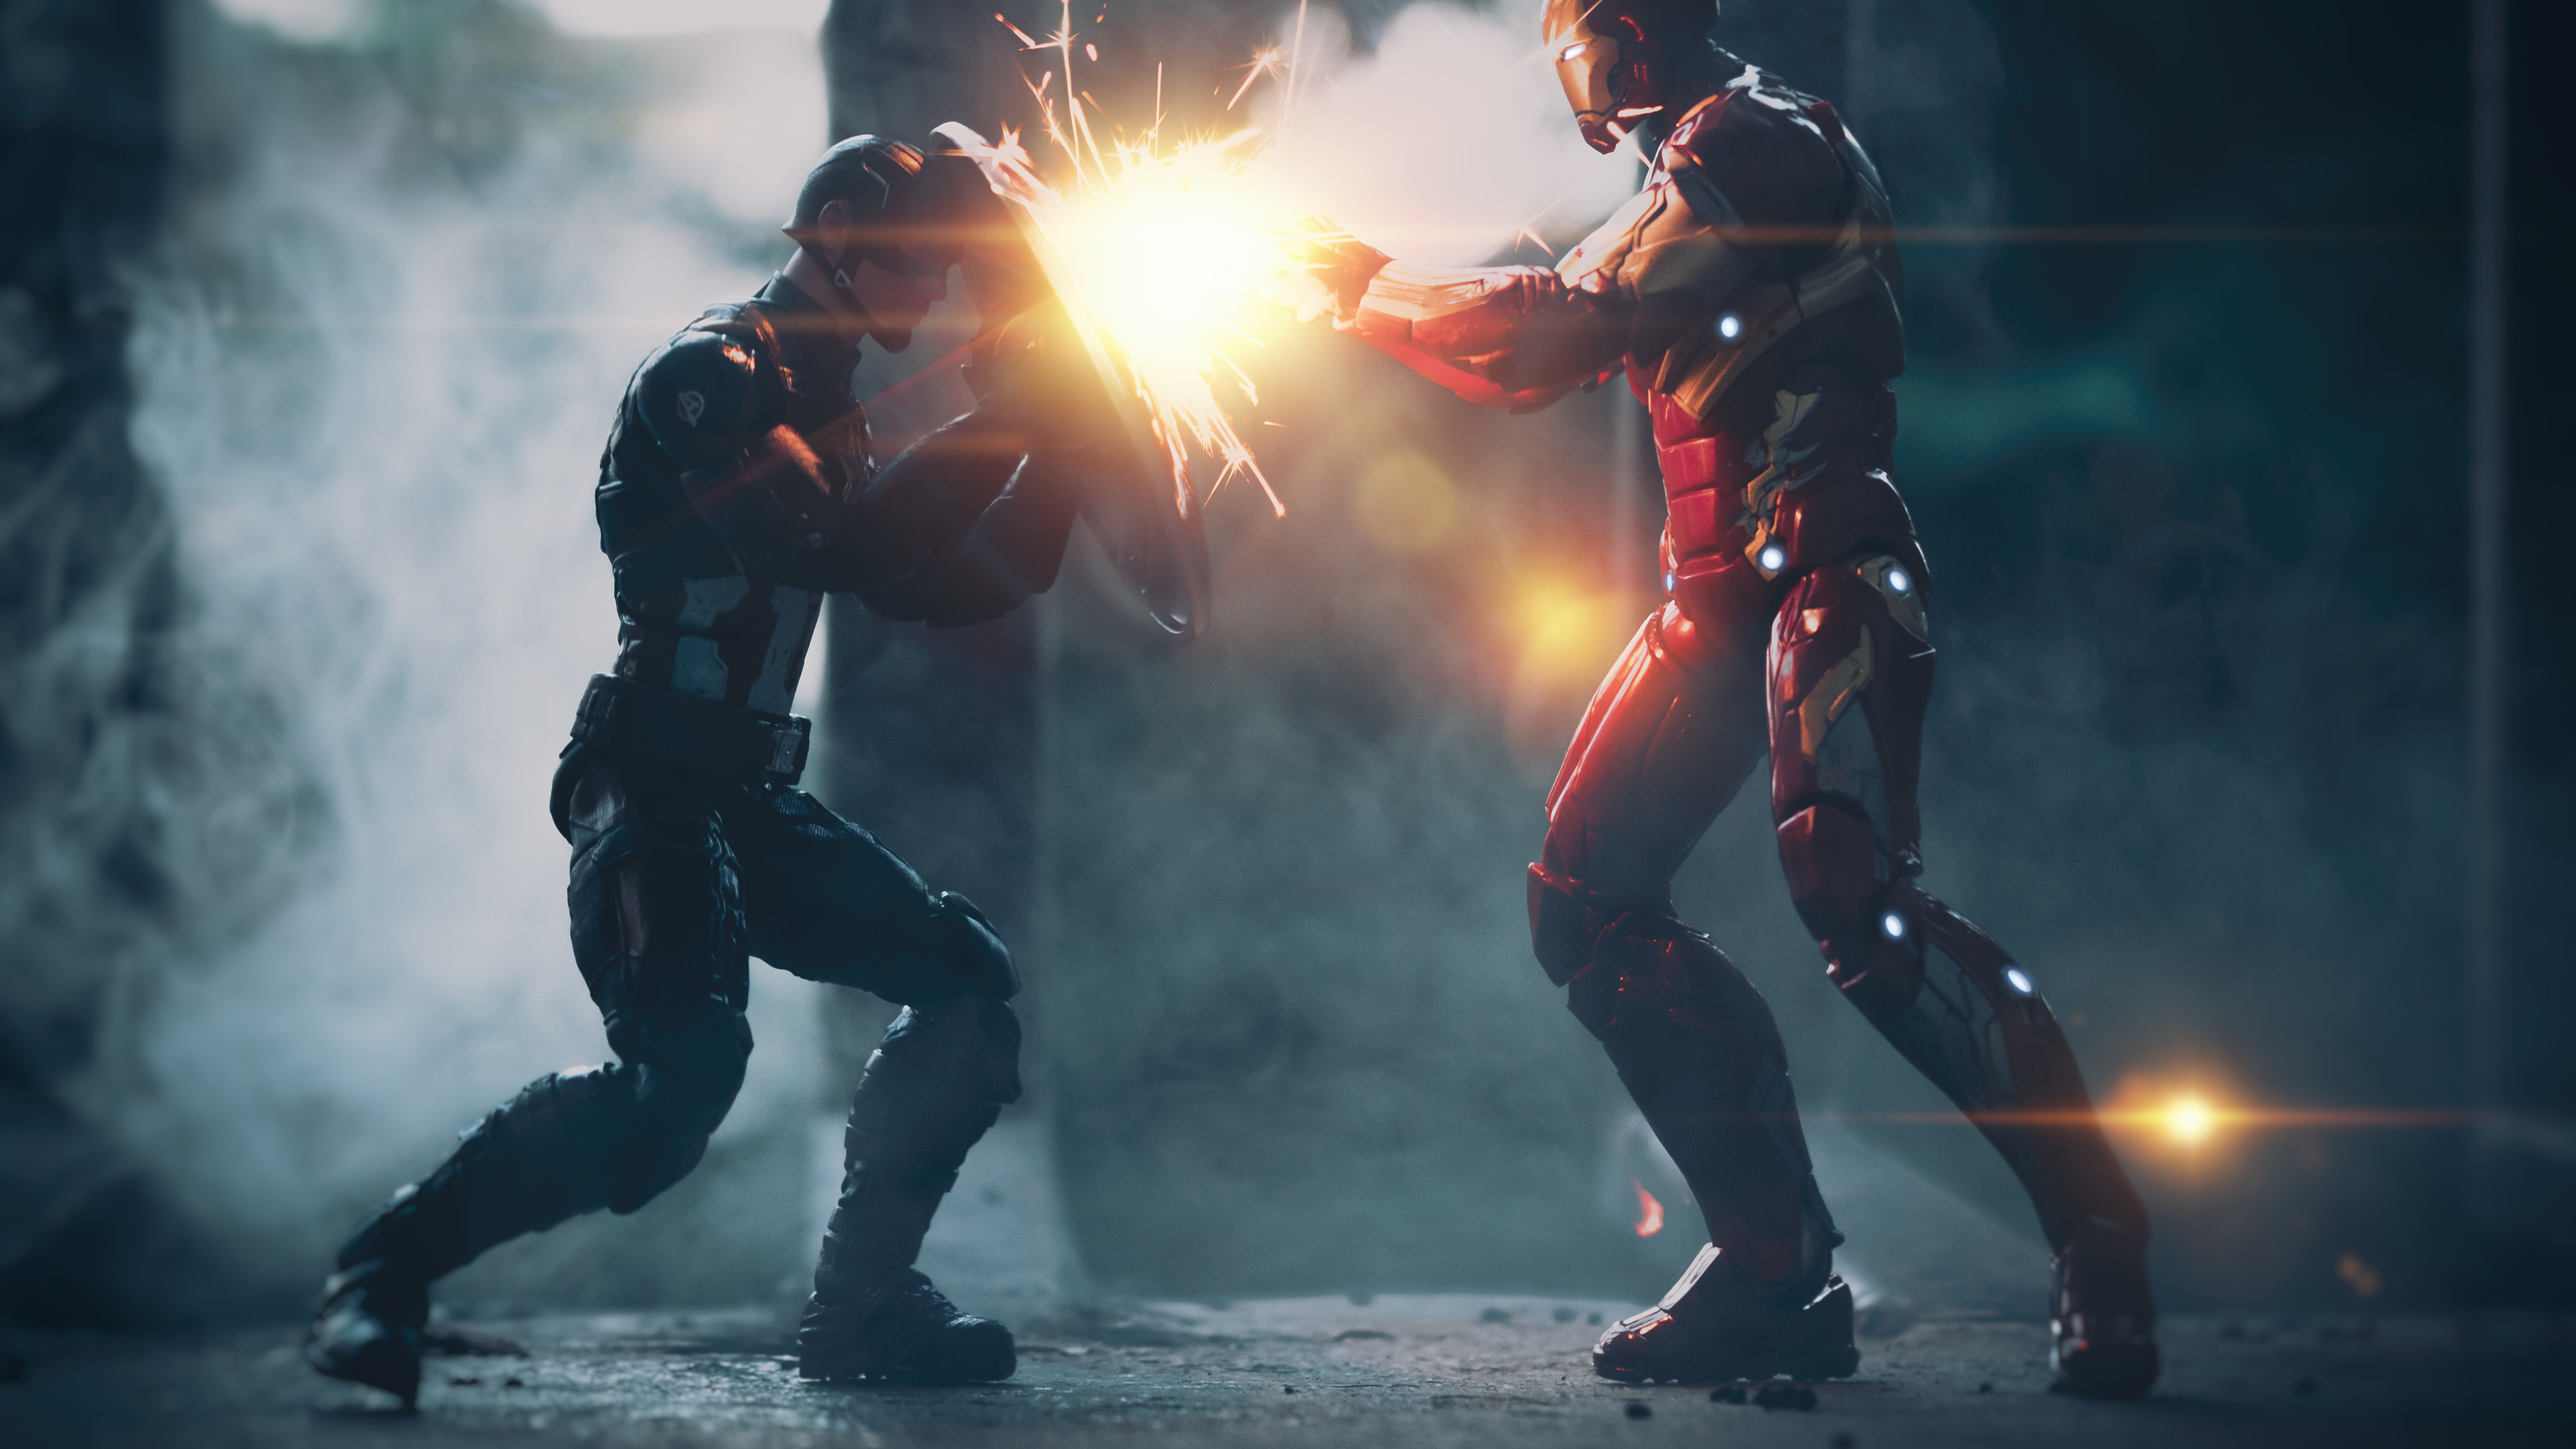 Captain America Vs Iron Man Artwork 5k super heroes wallpapers, iron